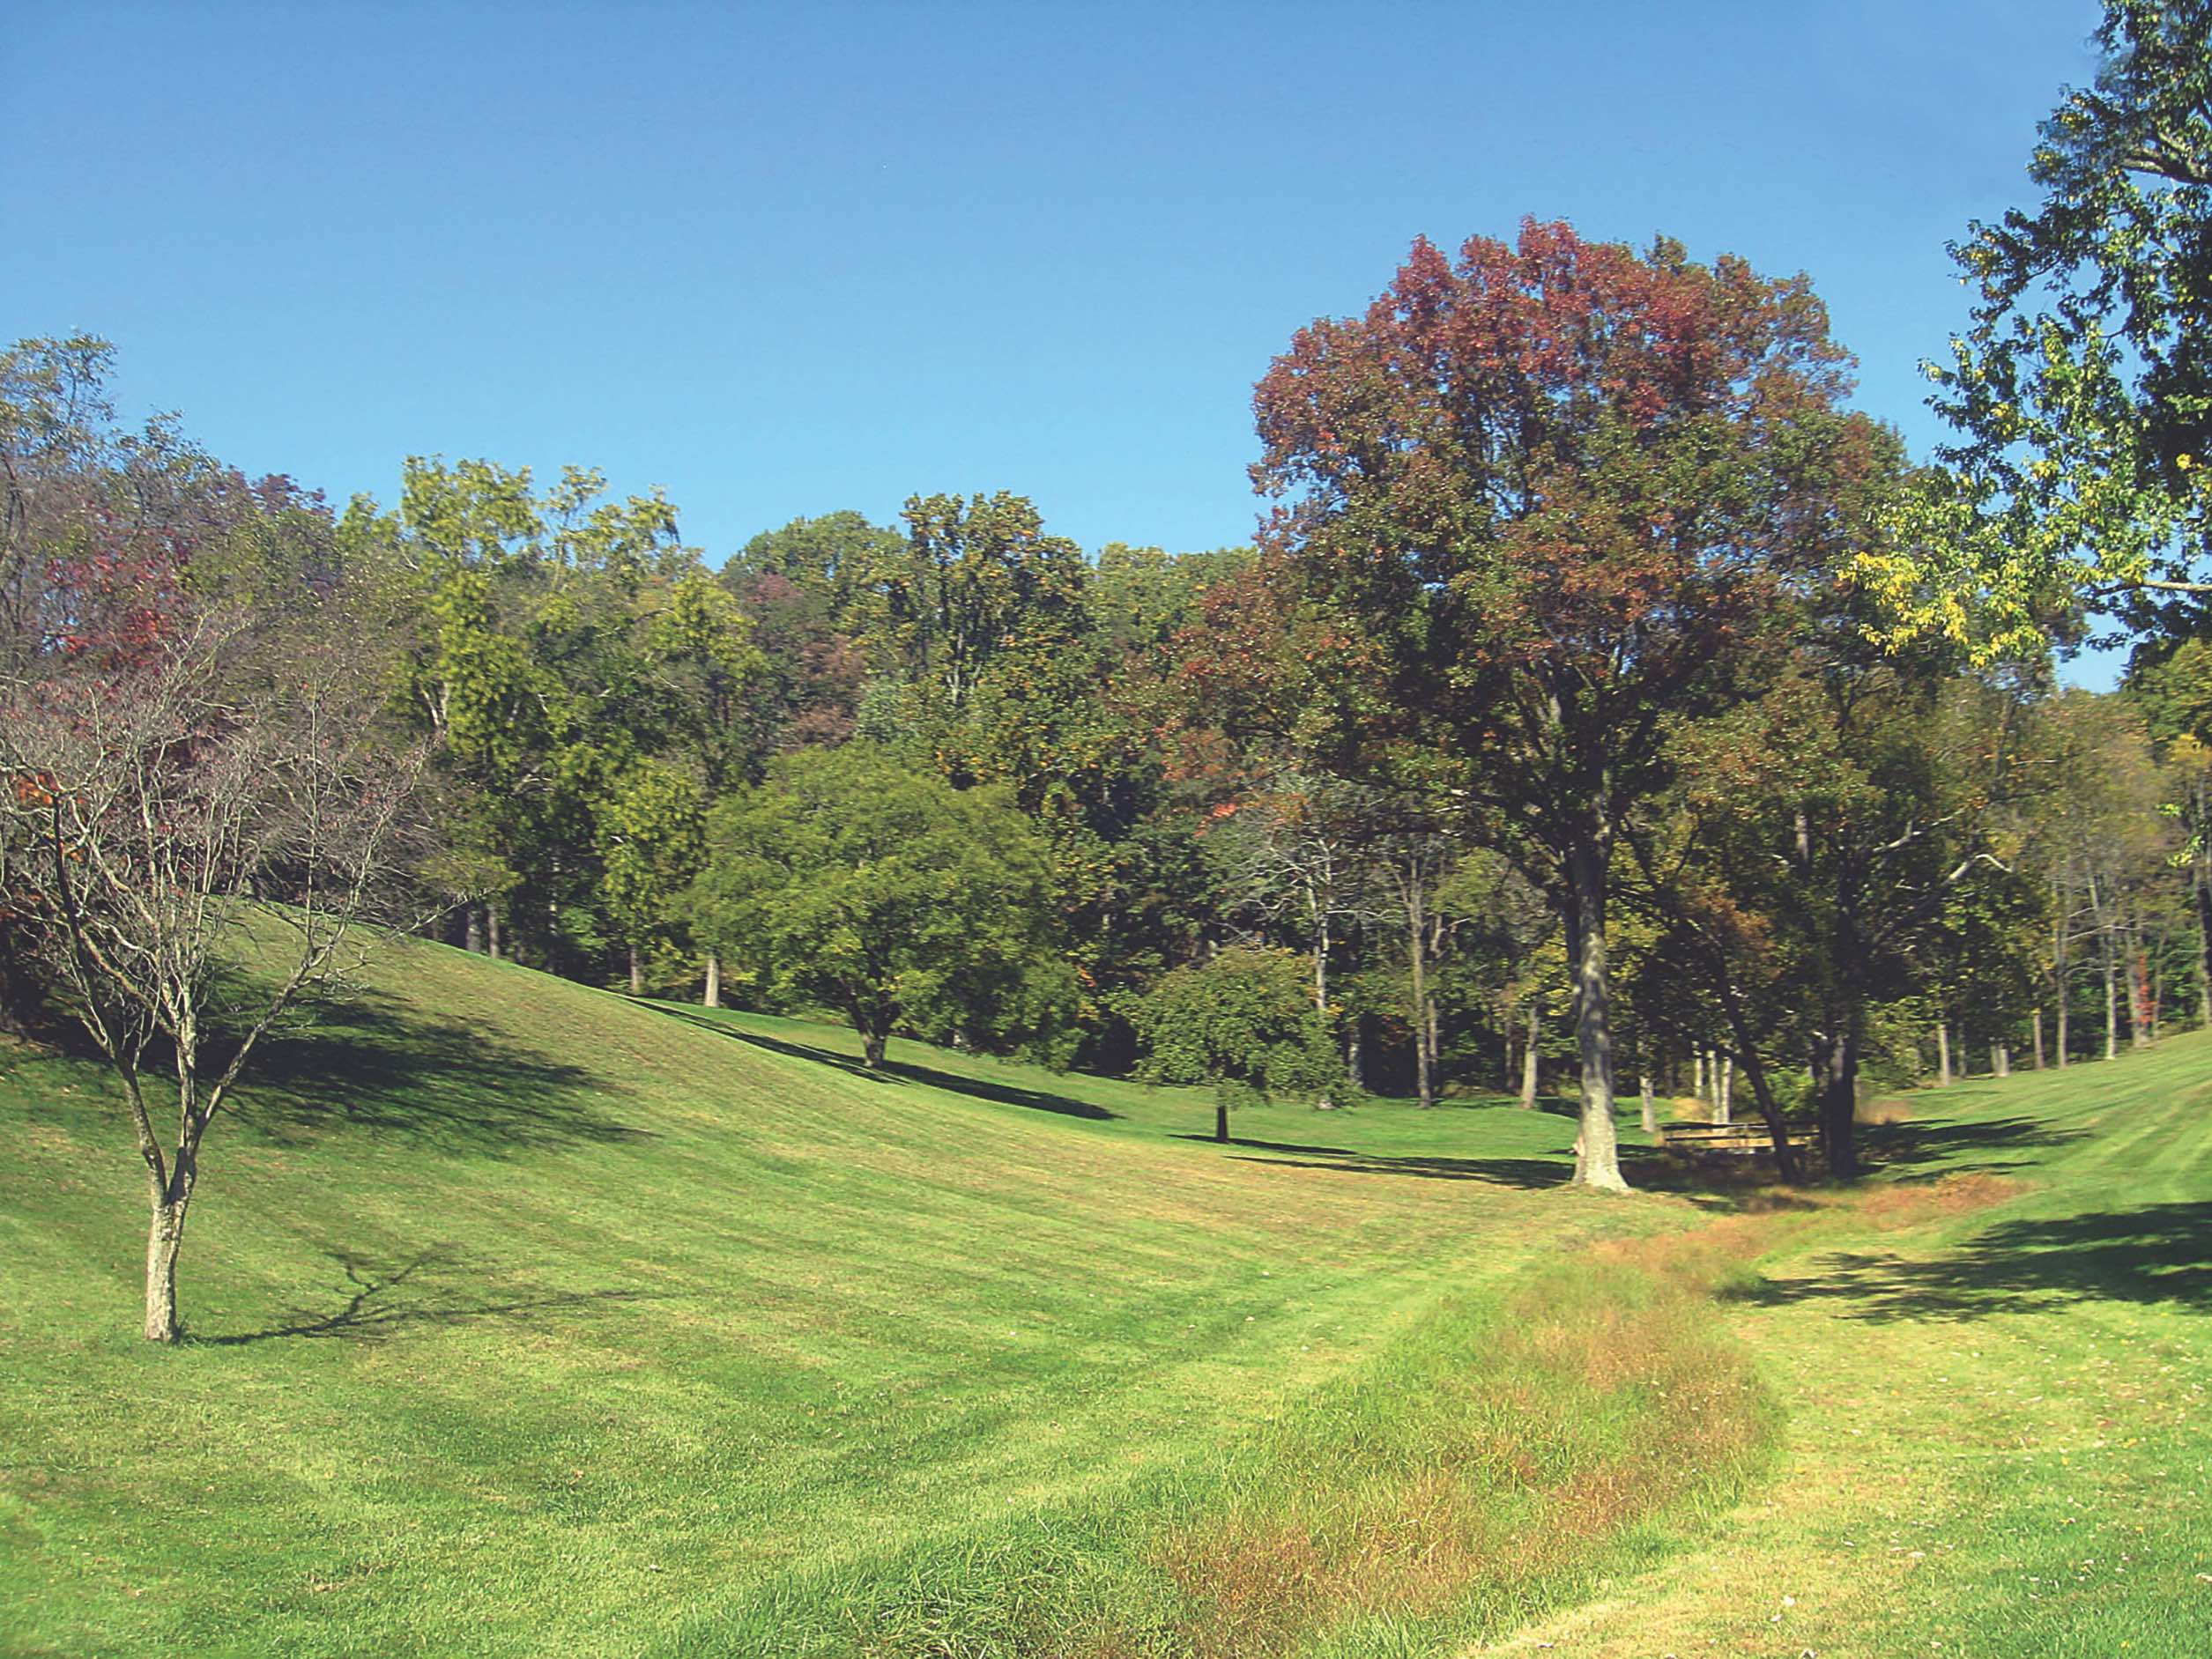 The present-day park encompasses 50 acres, a fraction of the 35,000-acre 1777 battlefield.